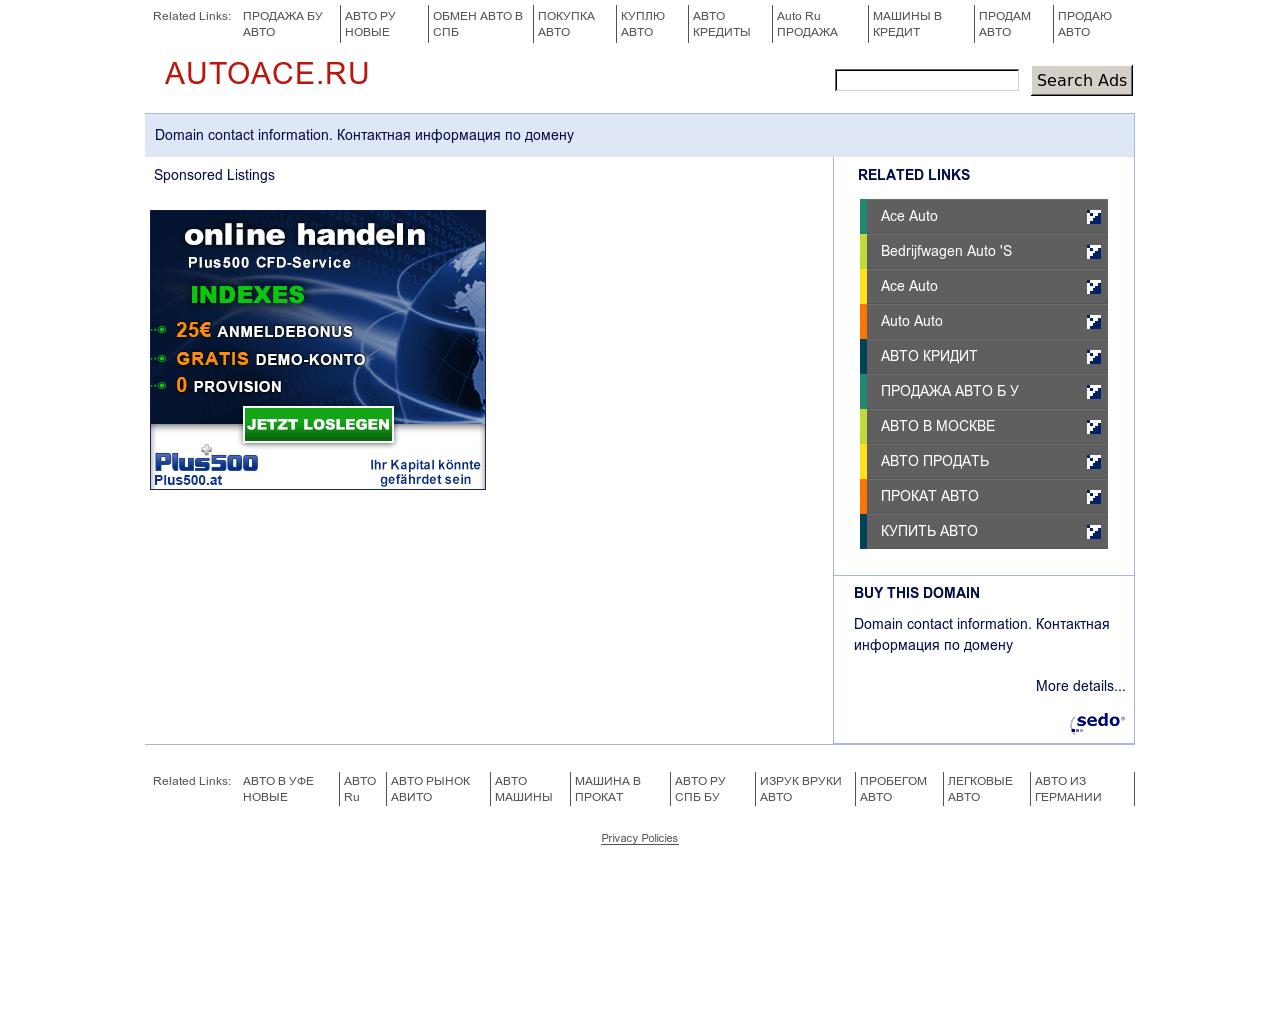 Изображение сайта autoace.ru в разрешении 1280x1024